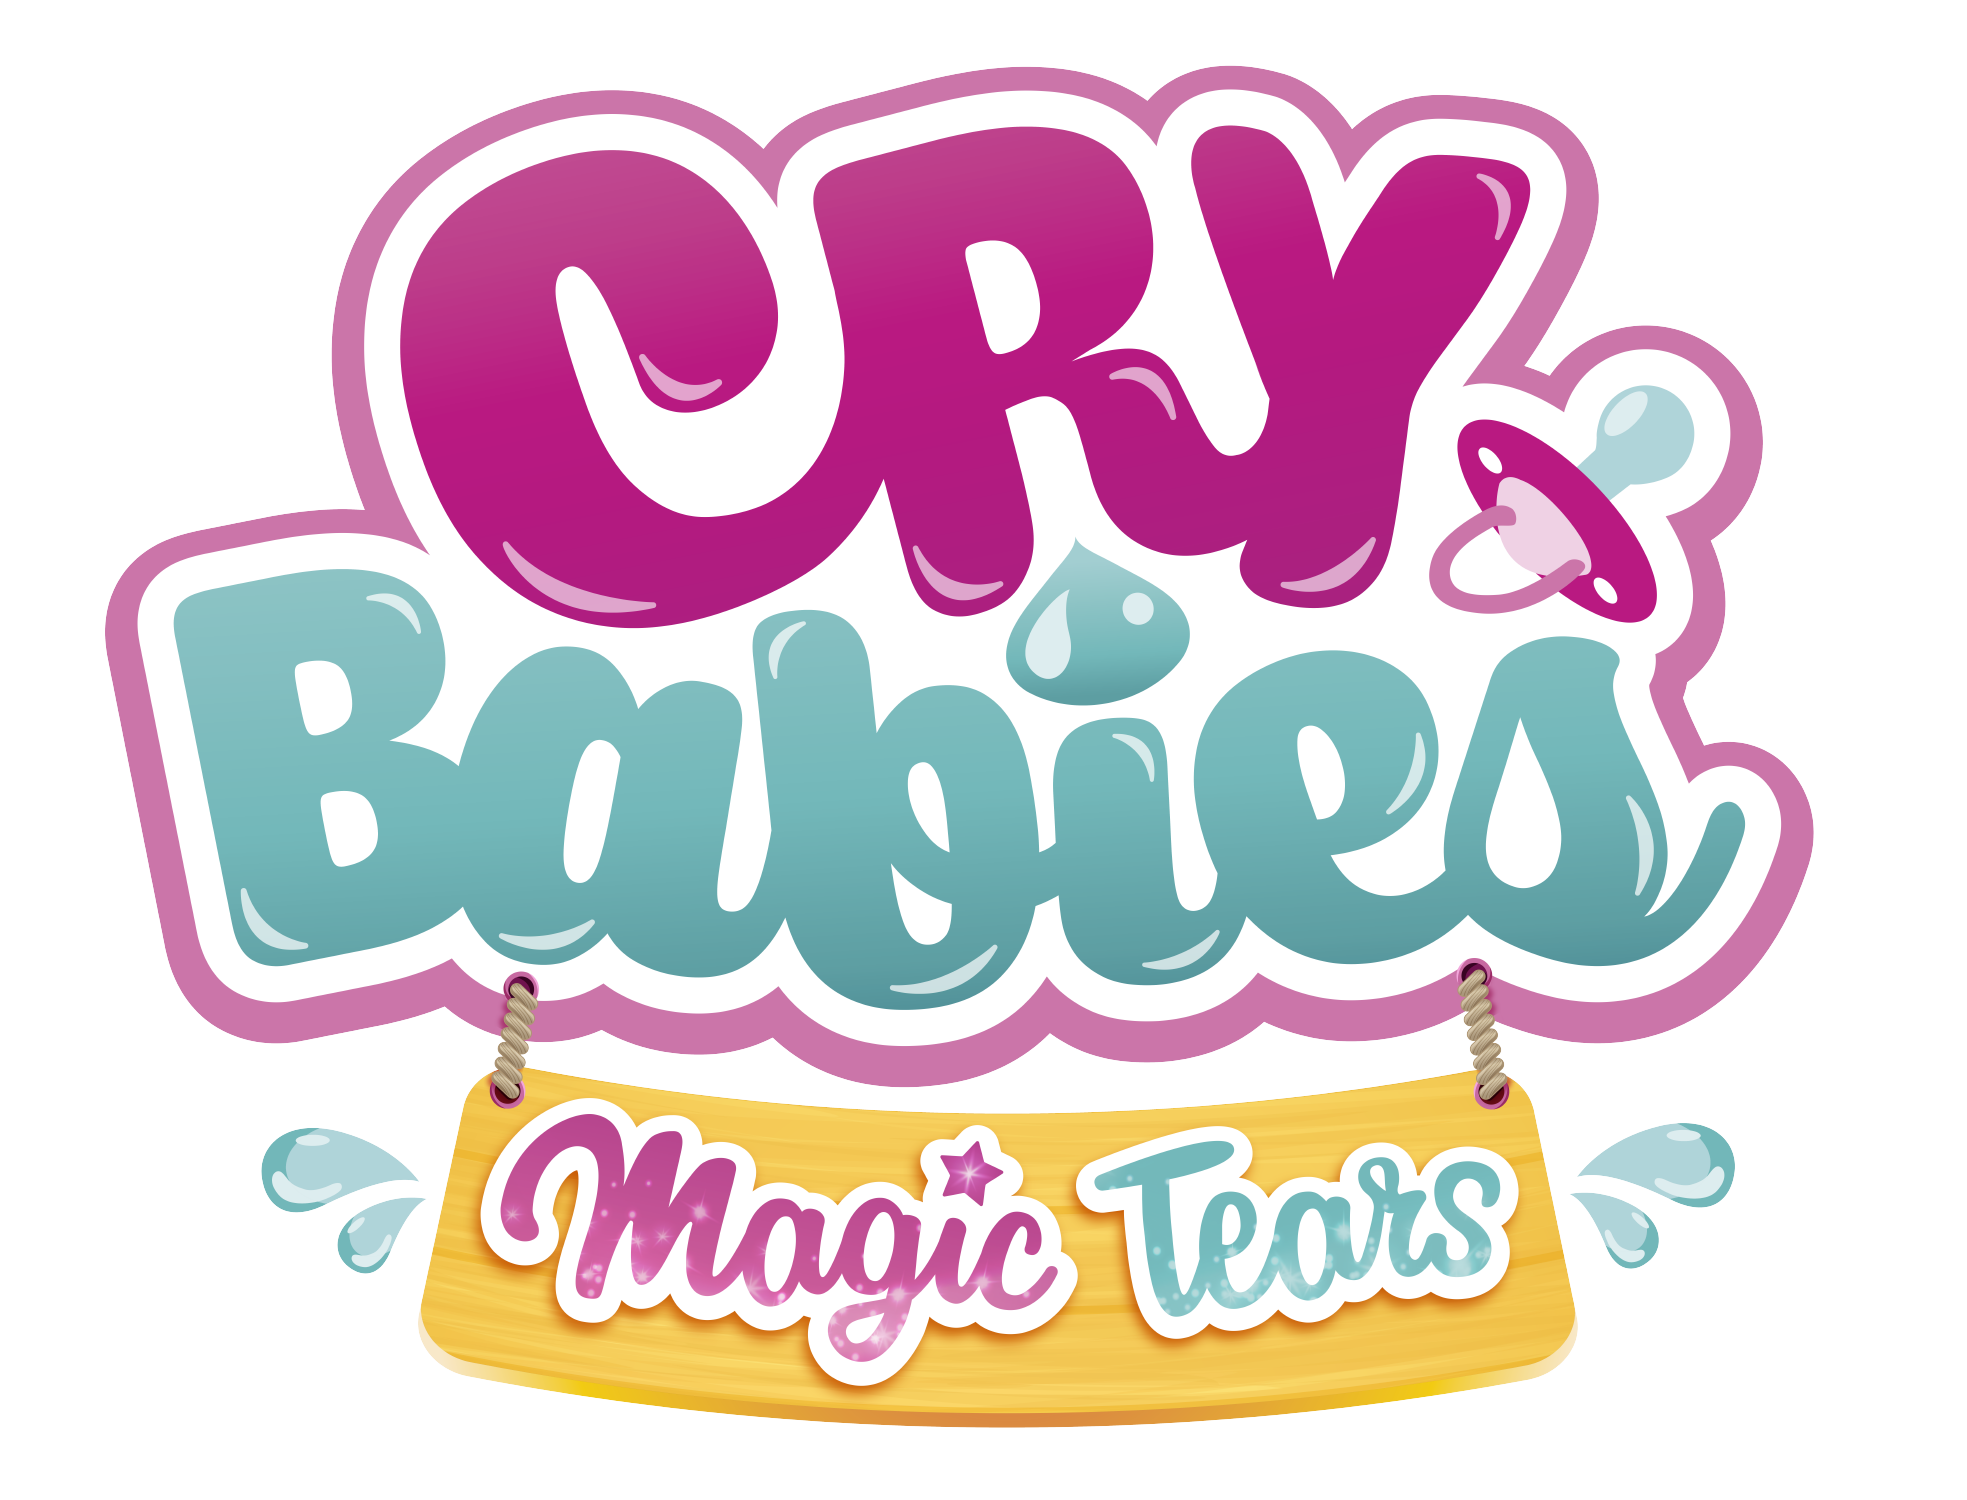 CRY BABIES MAGIC TEARS